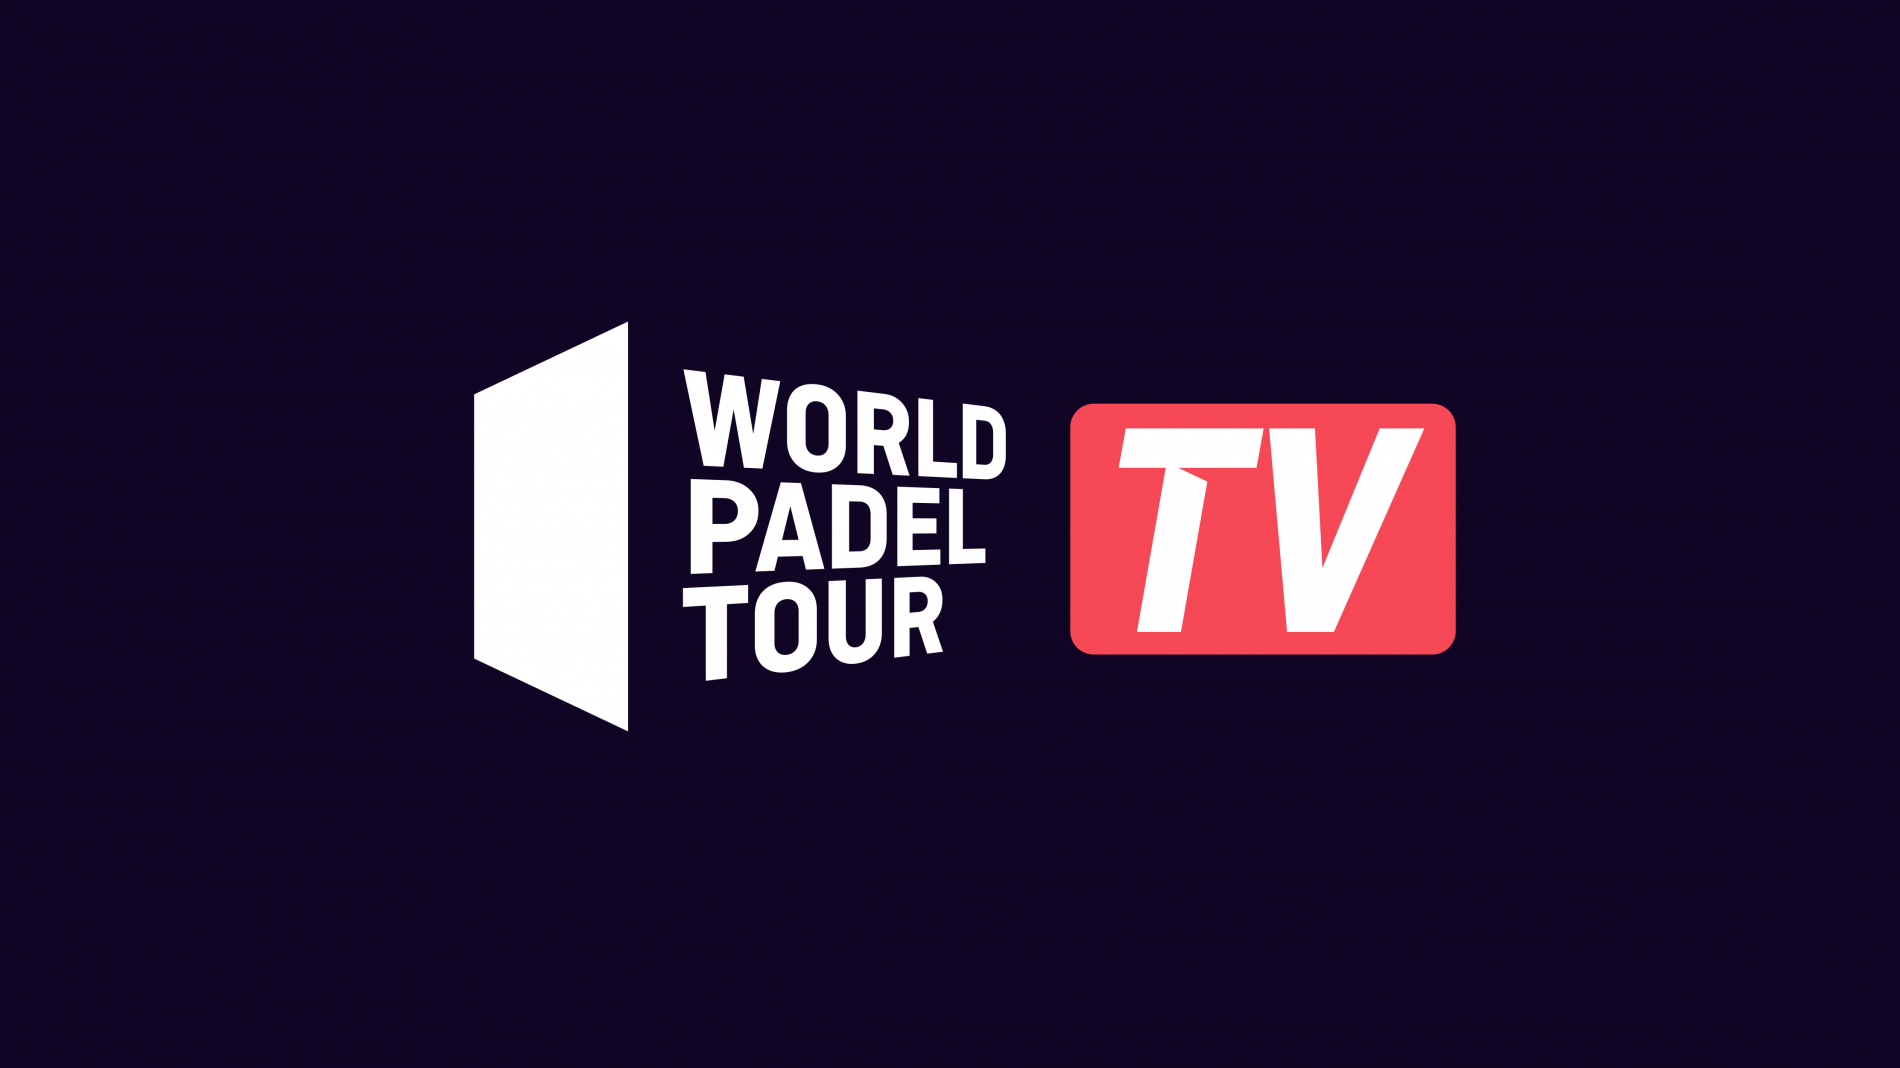 Le World Padel Tour disponibile in oltre 110 paesi!